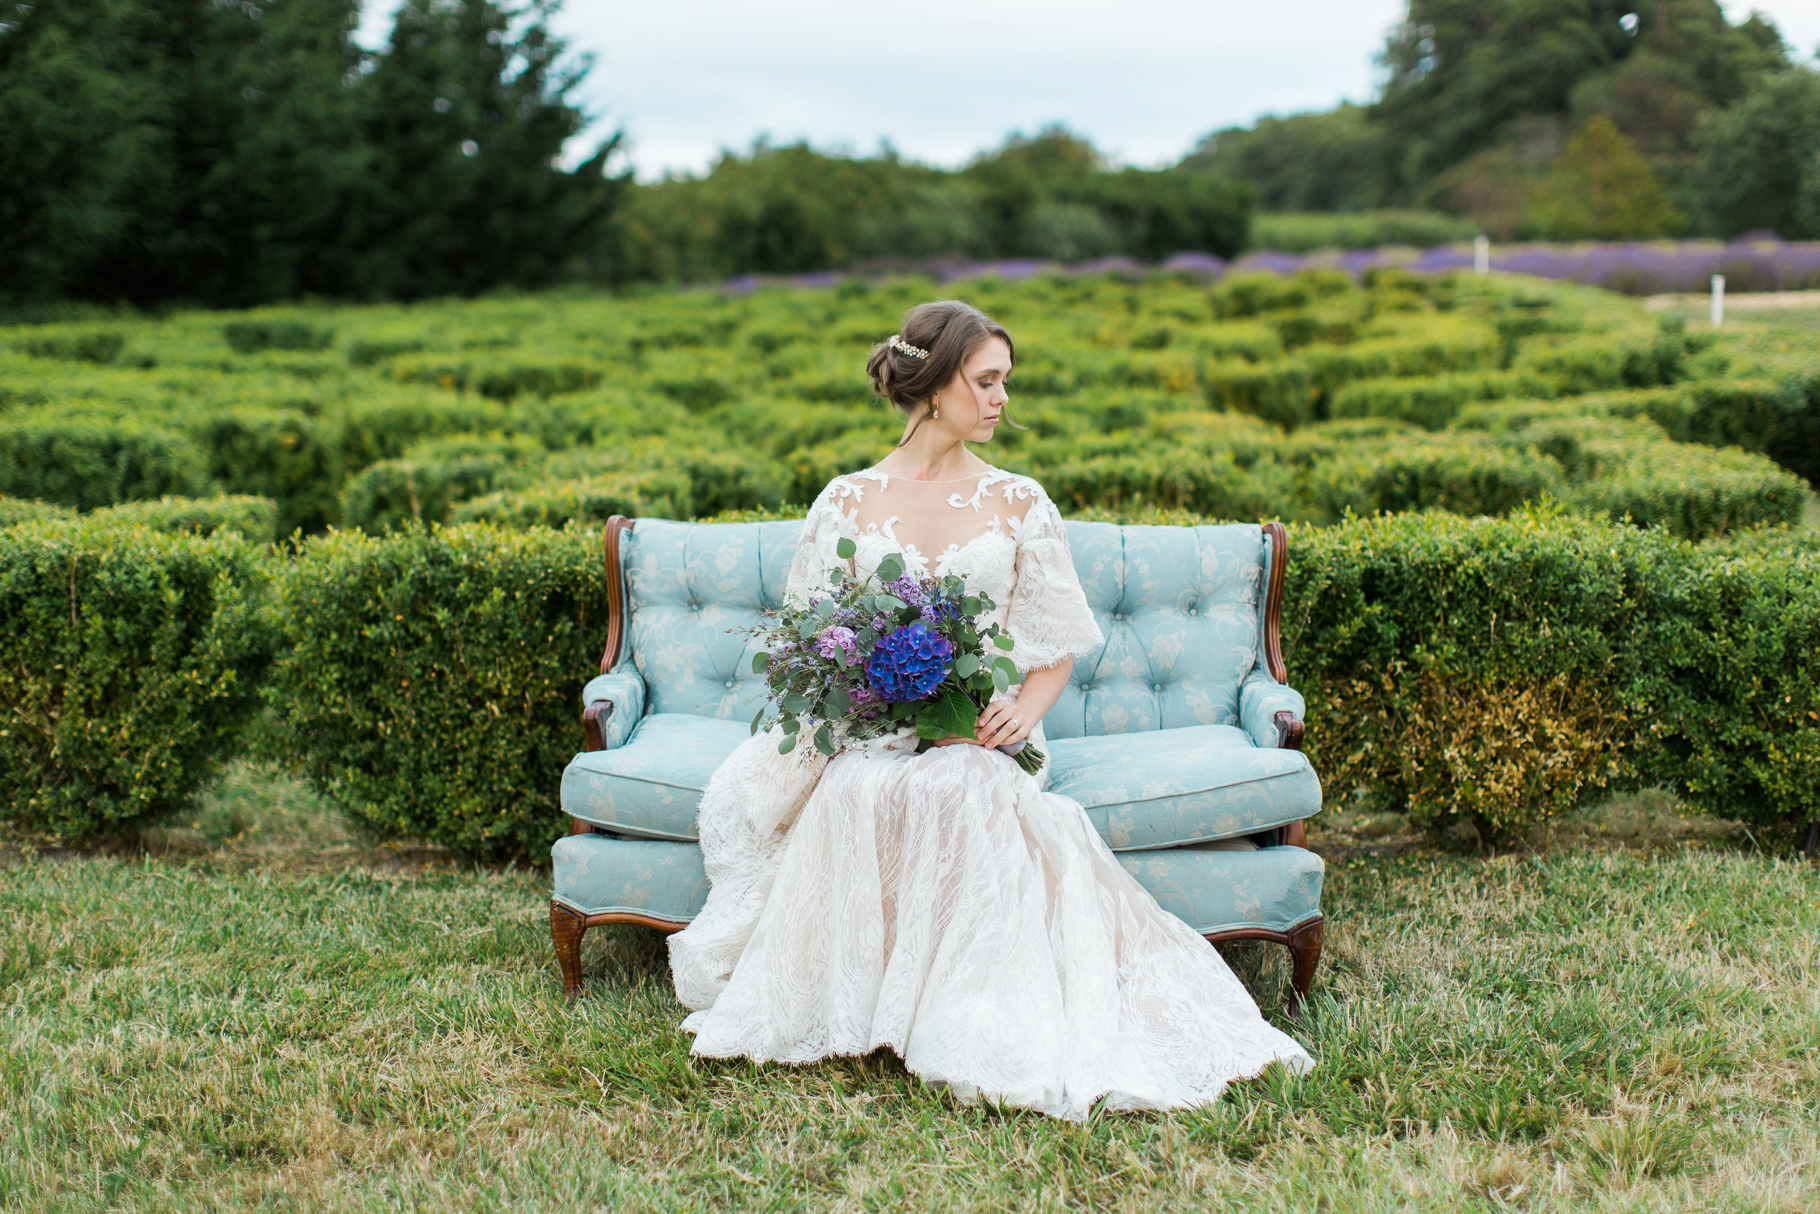 20-Olympic-Peninsula-Lavendar-Farm-bridal-Photography-jardin-de-soleil-Seattle-Wedding-Photographer